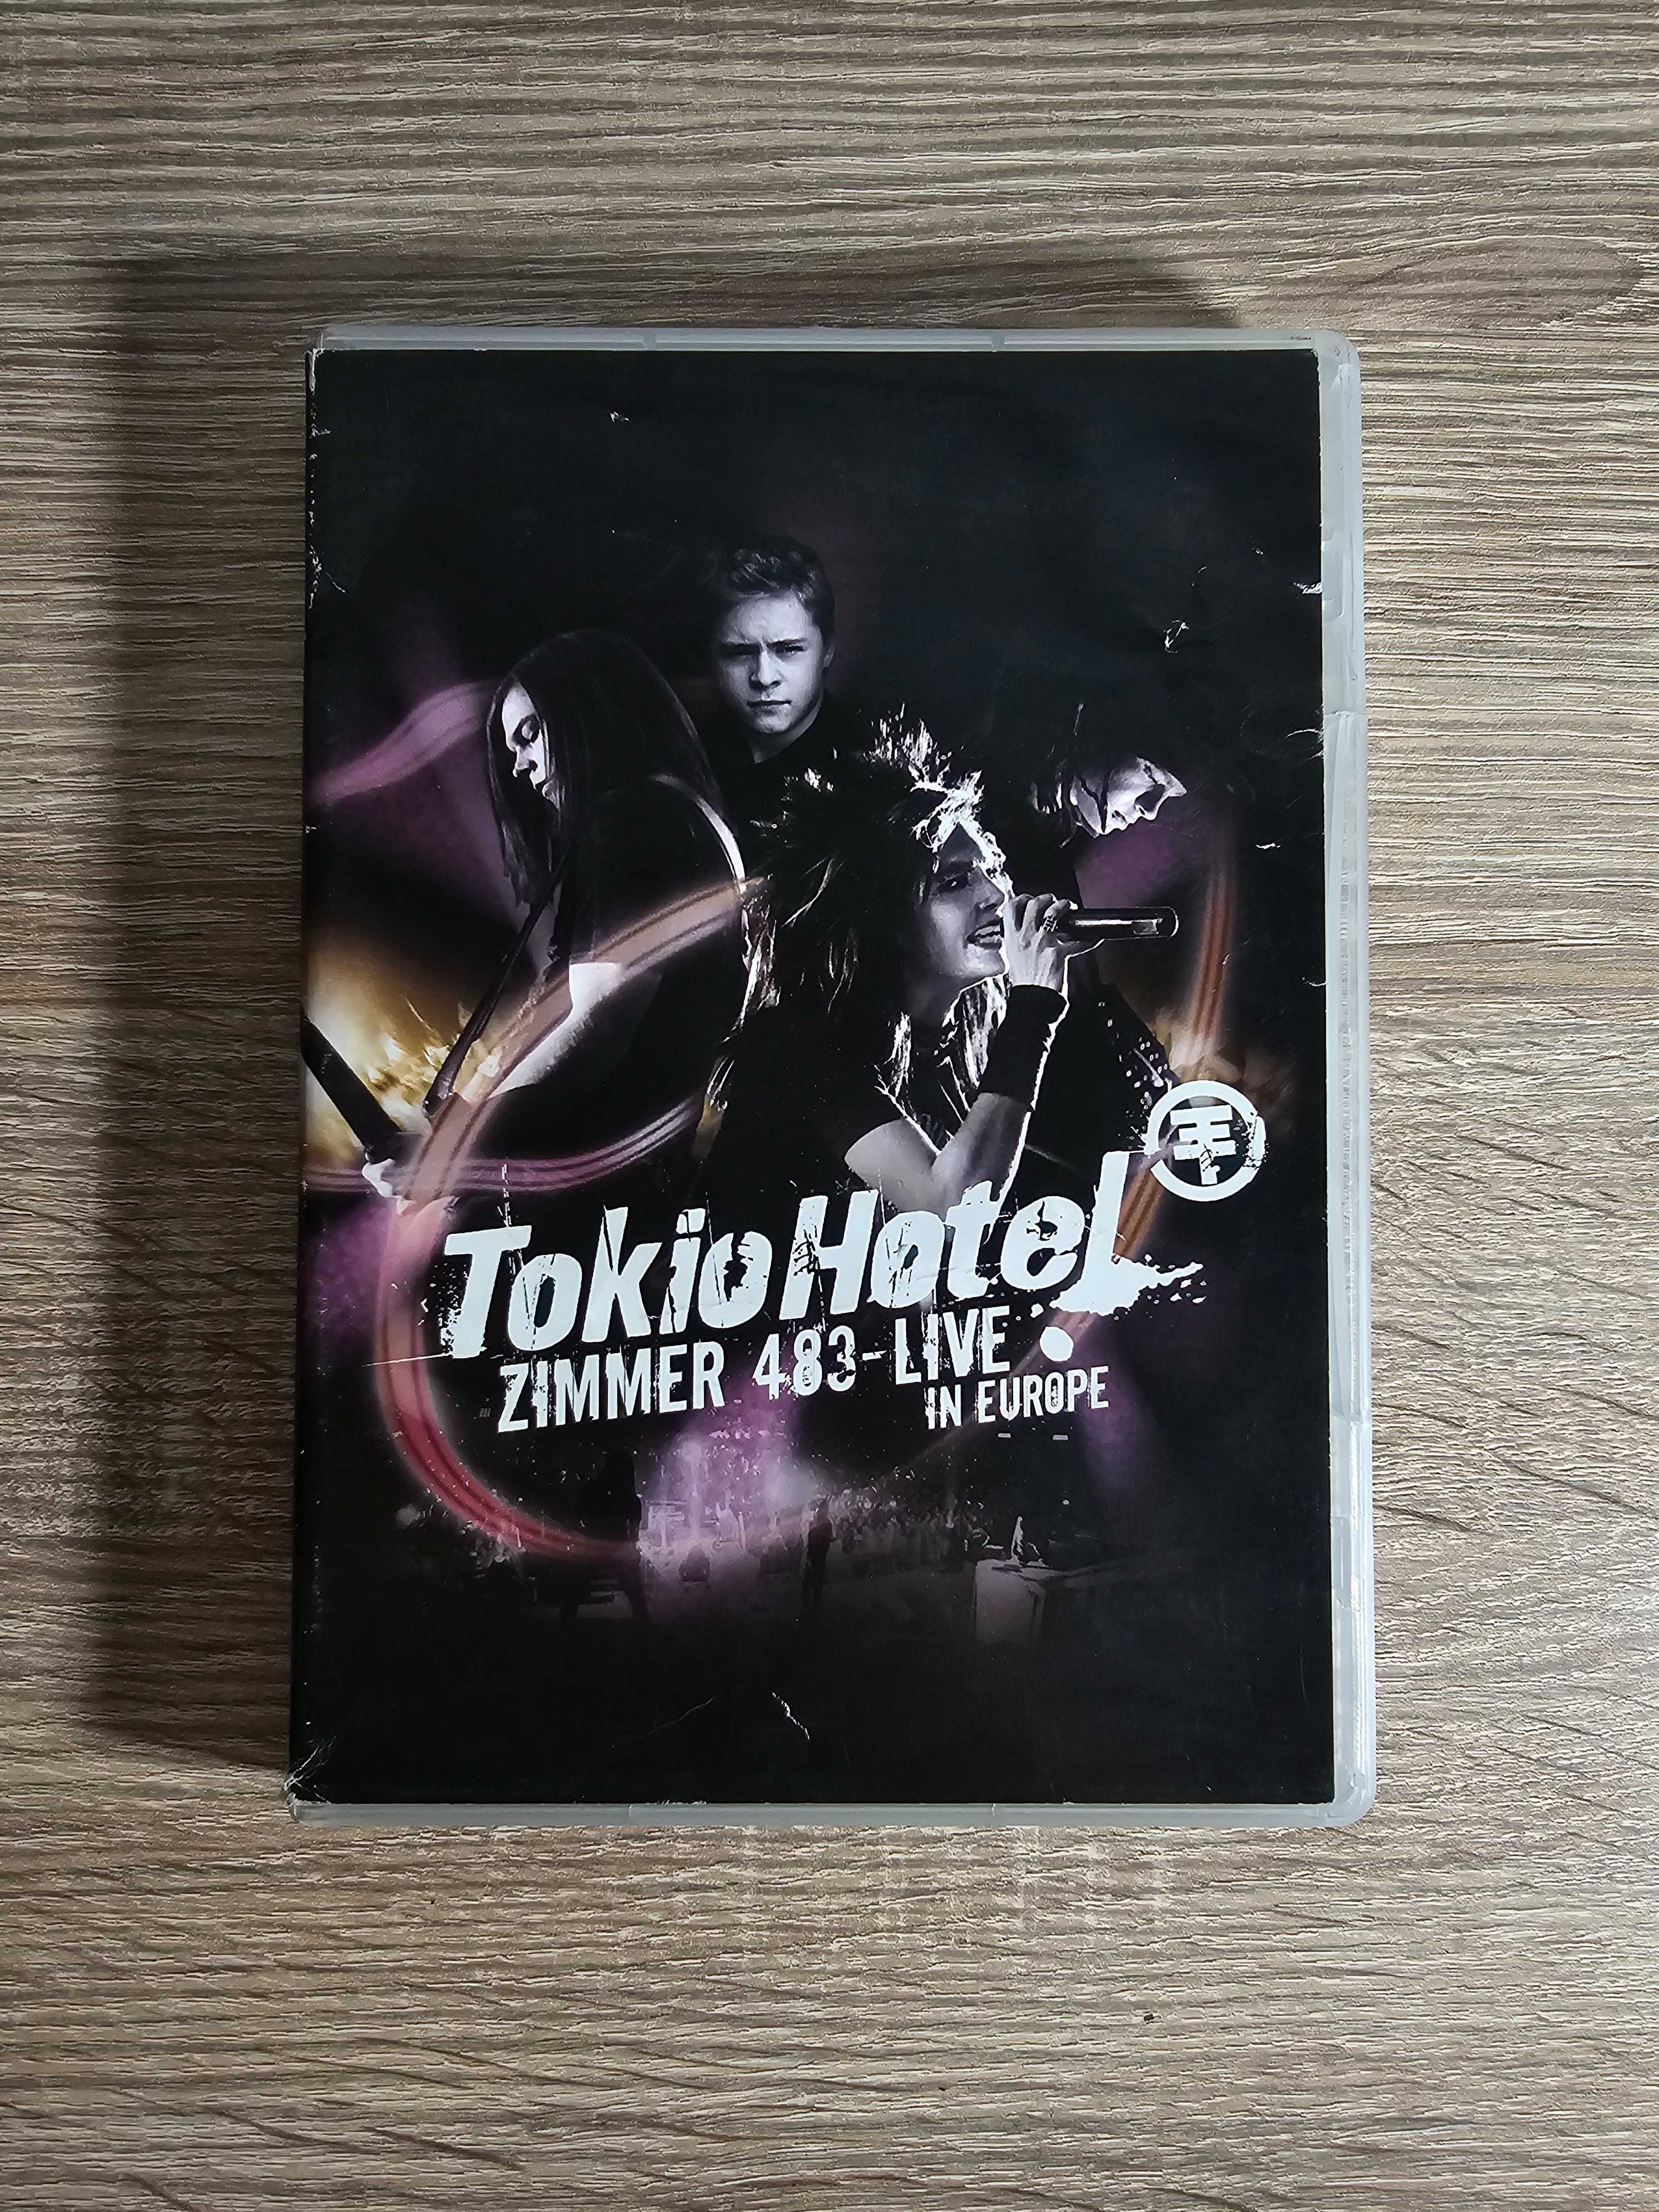 Tokio Hotel Zimmer 483 Live in Europe - DVD [UNIKAT]